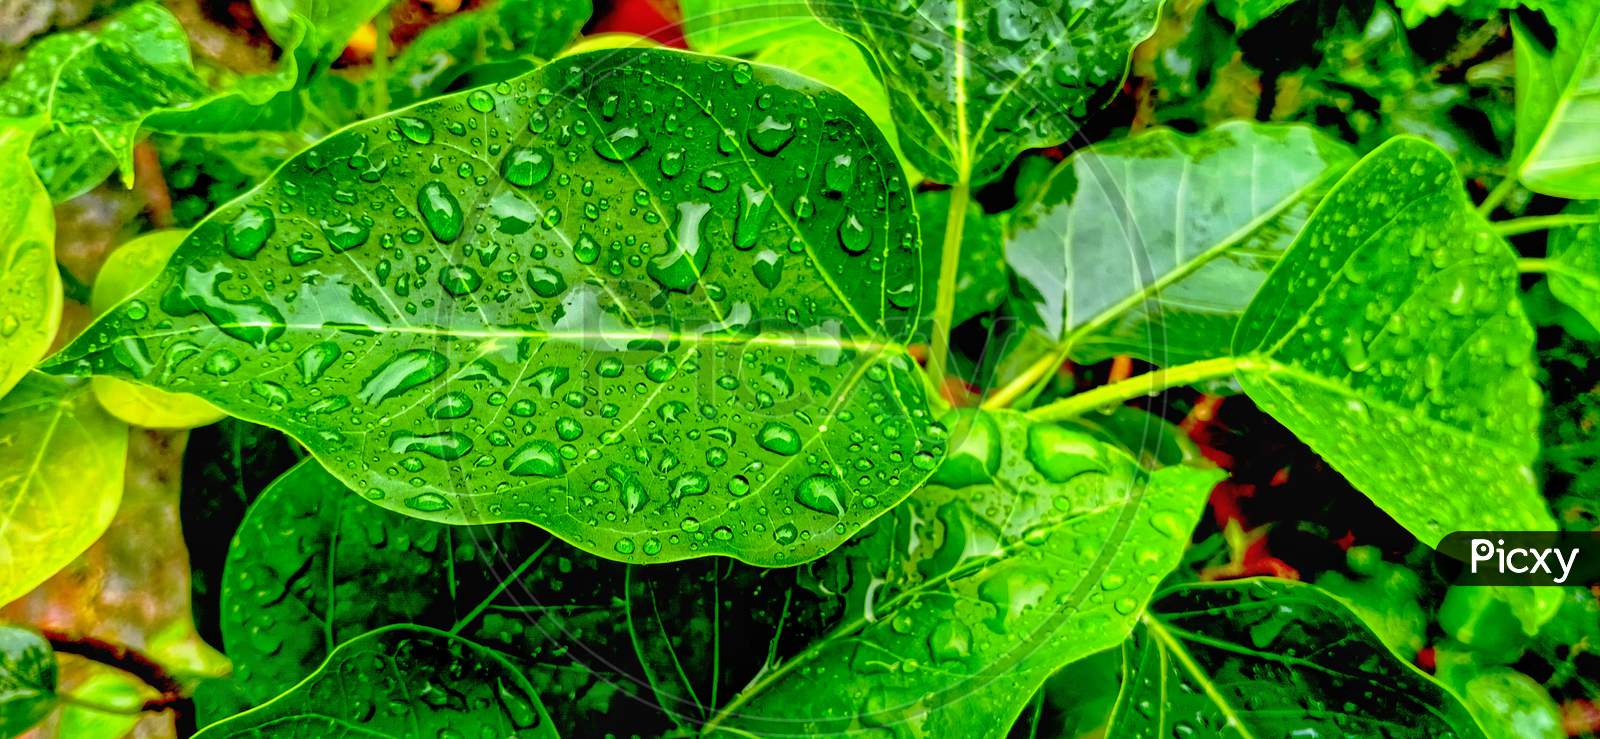 Rain drop on a leaf in monsoon